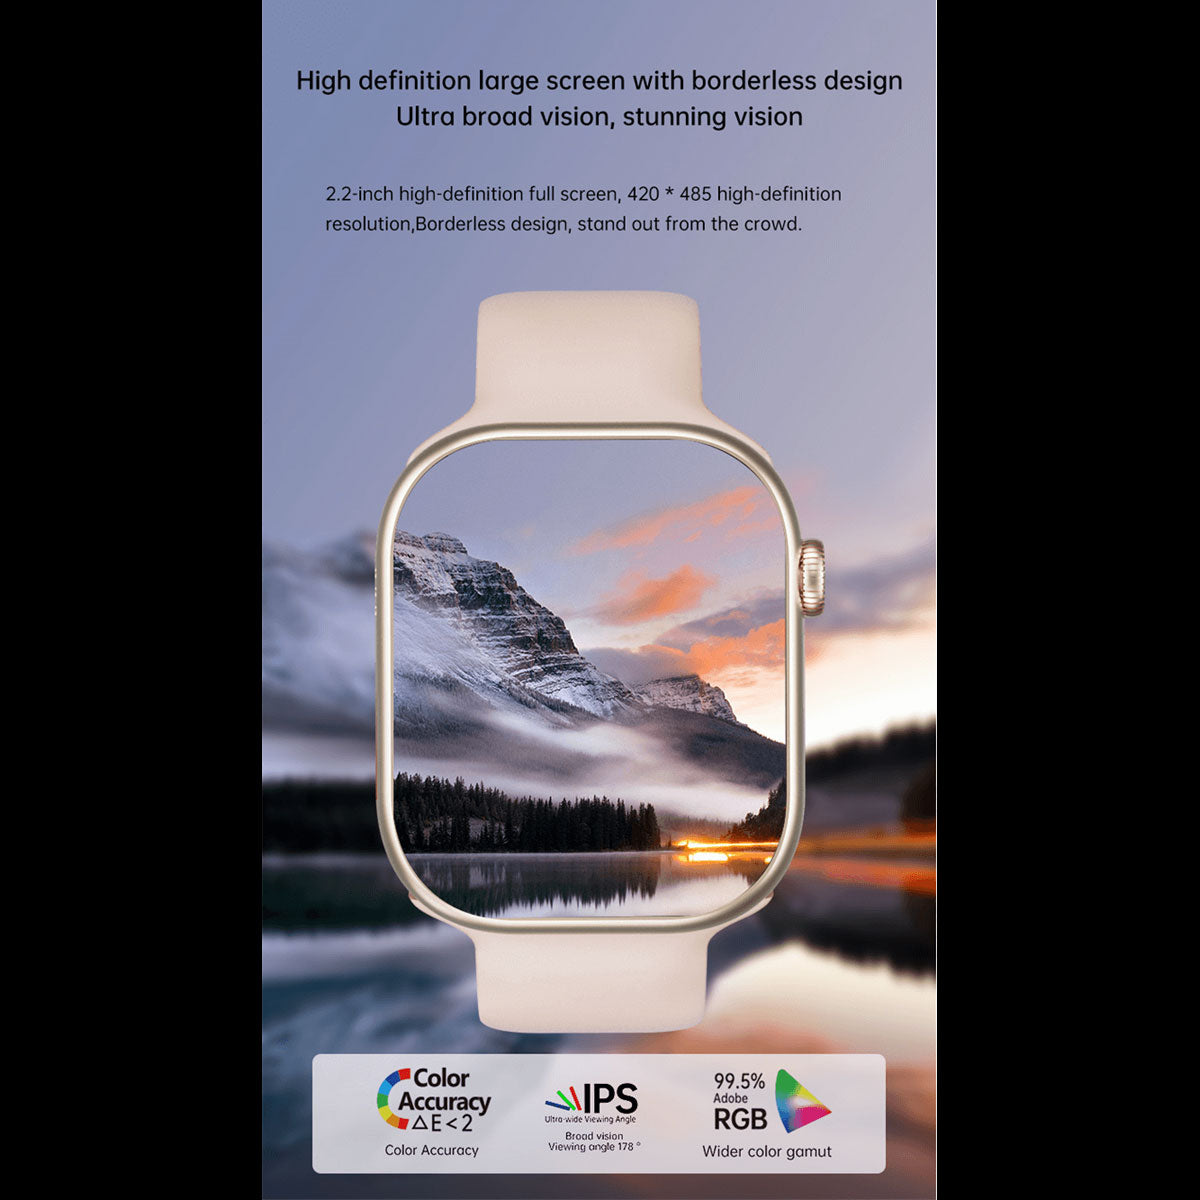 Smartwatch Reloj Inteligente Fralugio GS9 Pro Max Pantalla HD IA Monitoreo de Salud